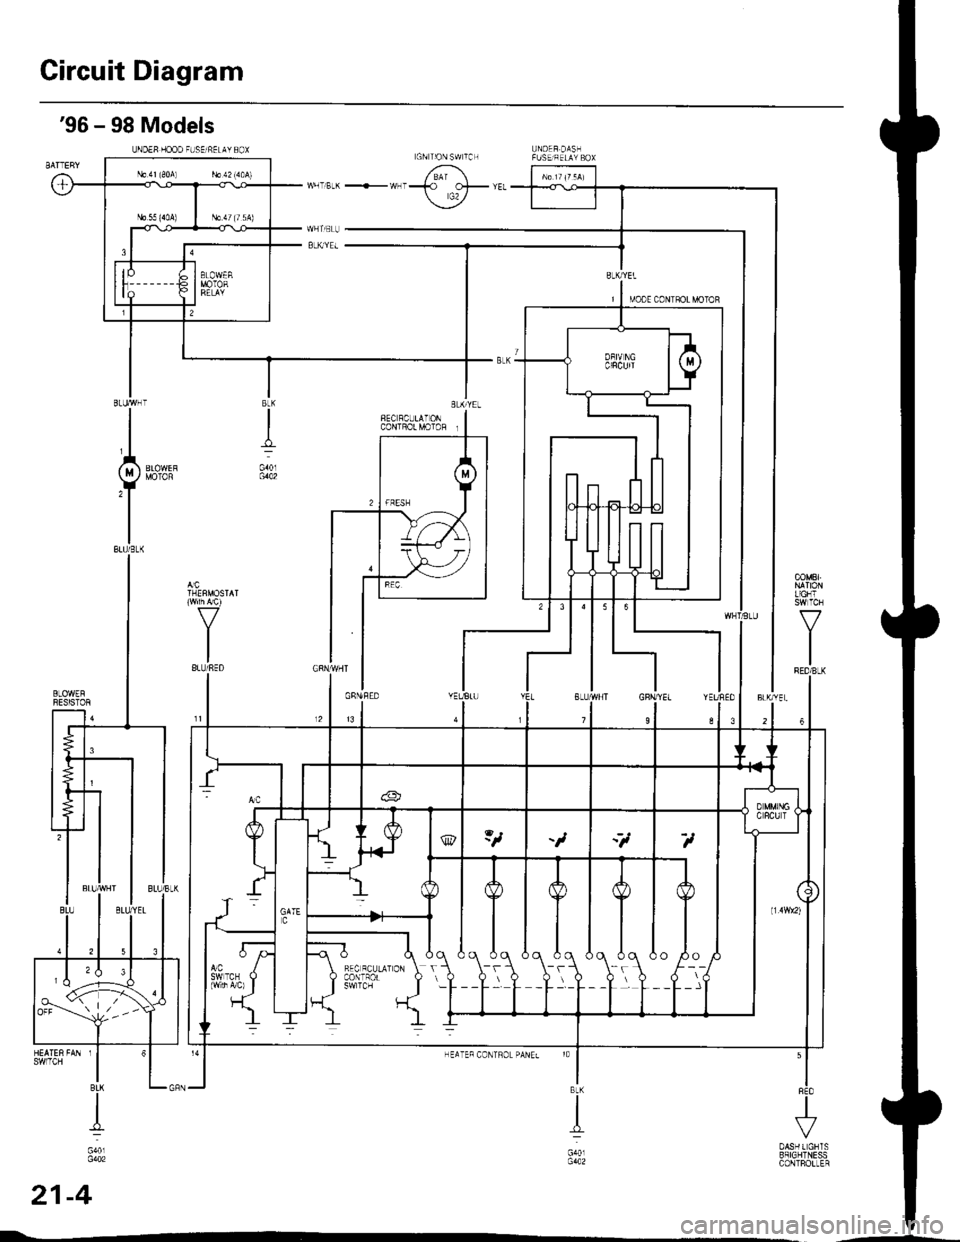 HONDA CIVIC 1996 6.G Service Manual Circuit Diagram
96 - 98 Models
LINDEF NoOD FUSETFELAY 30x
WNTTBLK +WFT
8L|(YEi
LIGHT
Y
I
No1l lS0Al Ni42 (40A)
S;rt | | lieti{,**i-t L-:} [:] | h
crca(.-A-o  \1 \-r. \-r-1 \\
!9[1 ? _?__?? _t__?